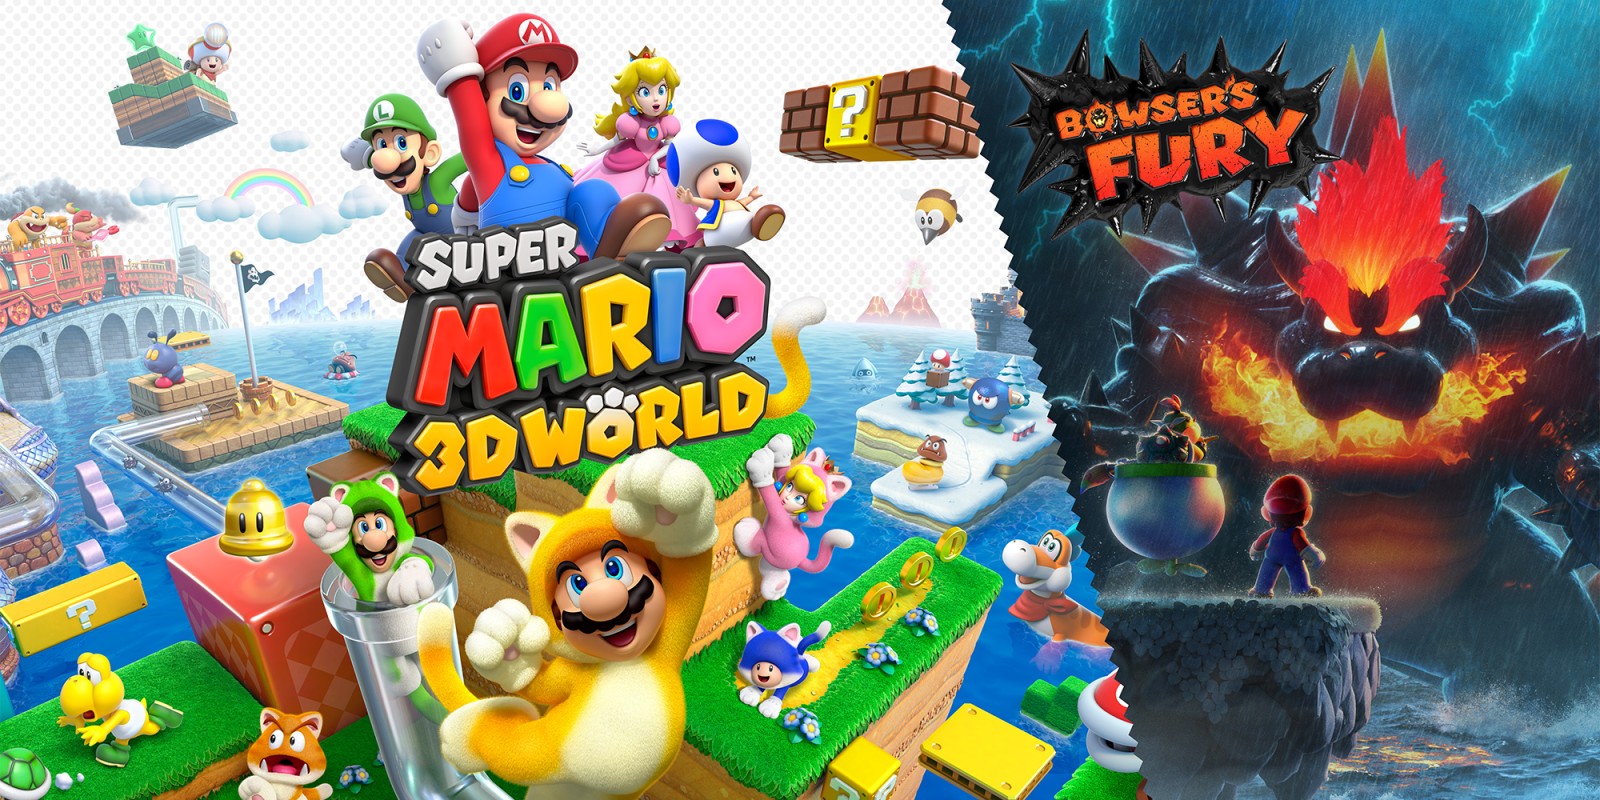 Super Mario 3d Land Super Mario 3D World + Bowser's Fury | Nintendo Switch games | Games |  Nintendo